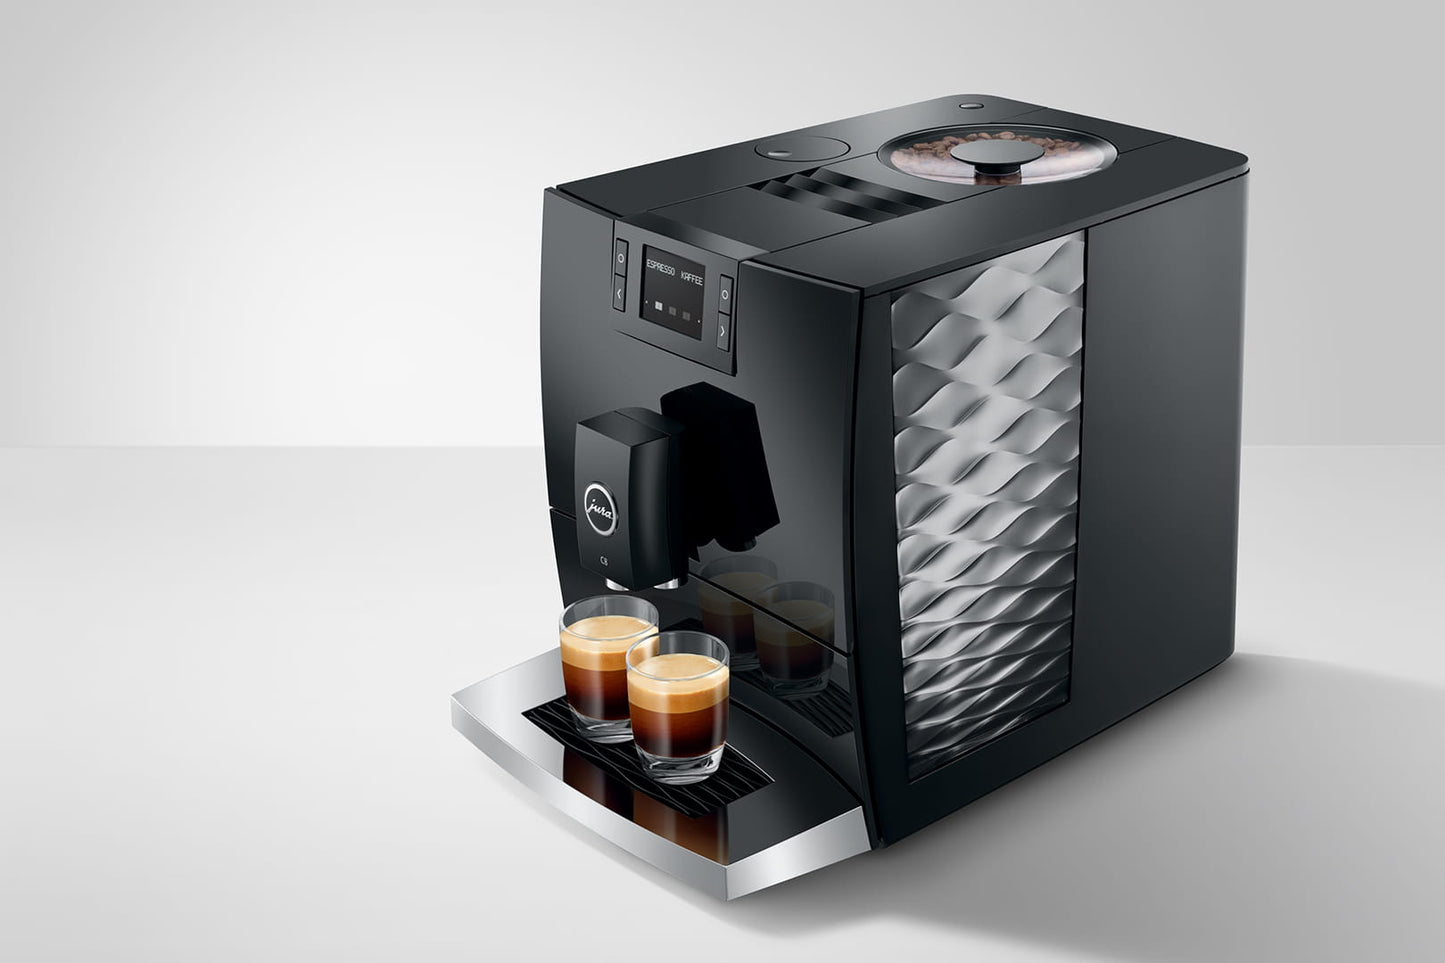 Jura C8 / Kaffeemaschine inkl. gratis Kaffee & Espressotassen